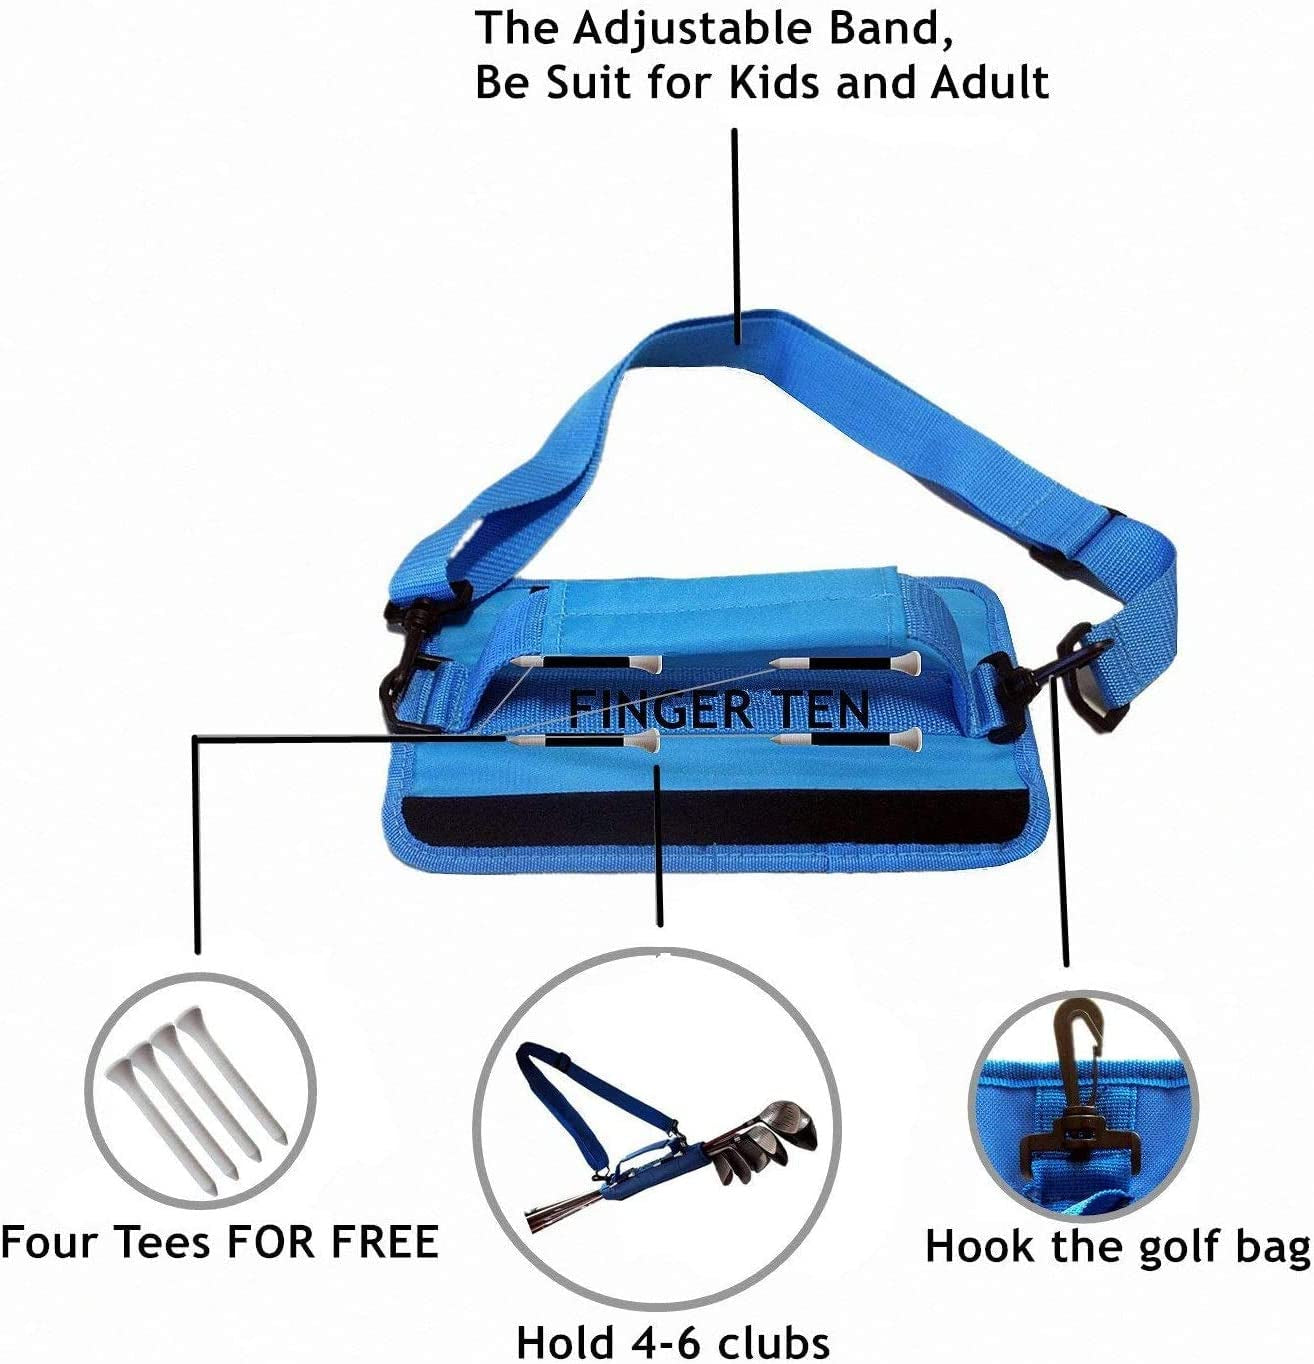 Golf Club Bag Mini for Men Women Kids Driving Range Course Practice, Golf Pencil Bag with Shoulder Straps Sleeves Lightweight Durable Fashion Color Black Blue Pink for Golf Training